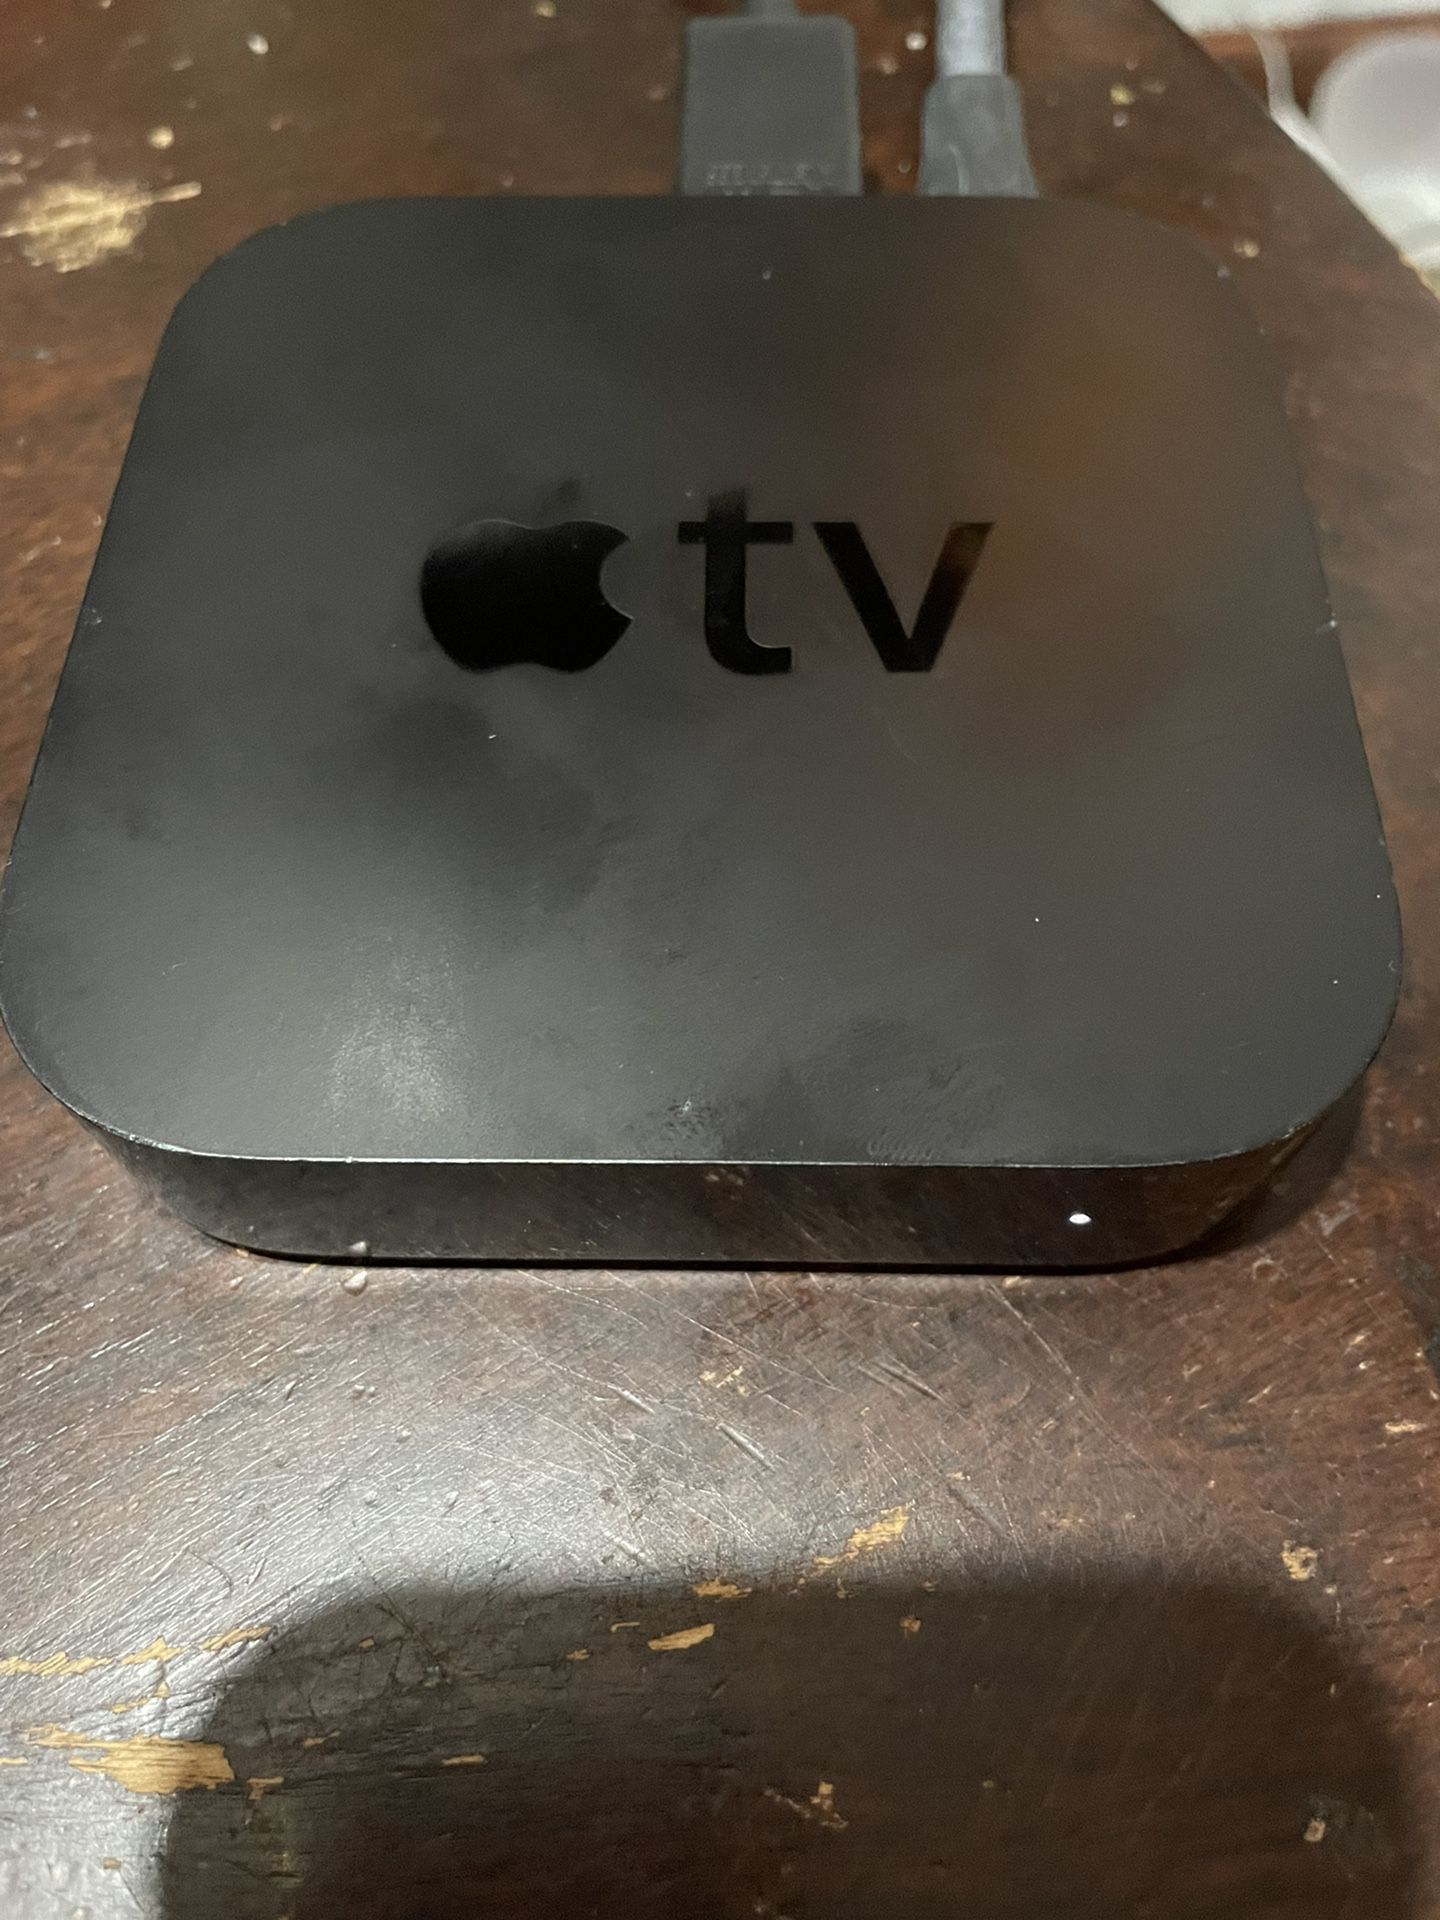 Apple tv 